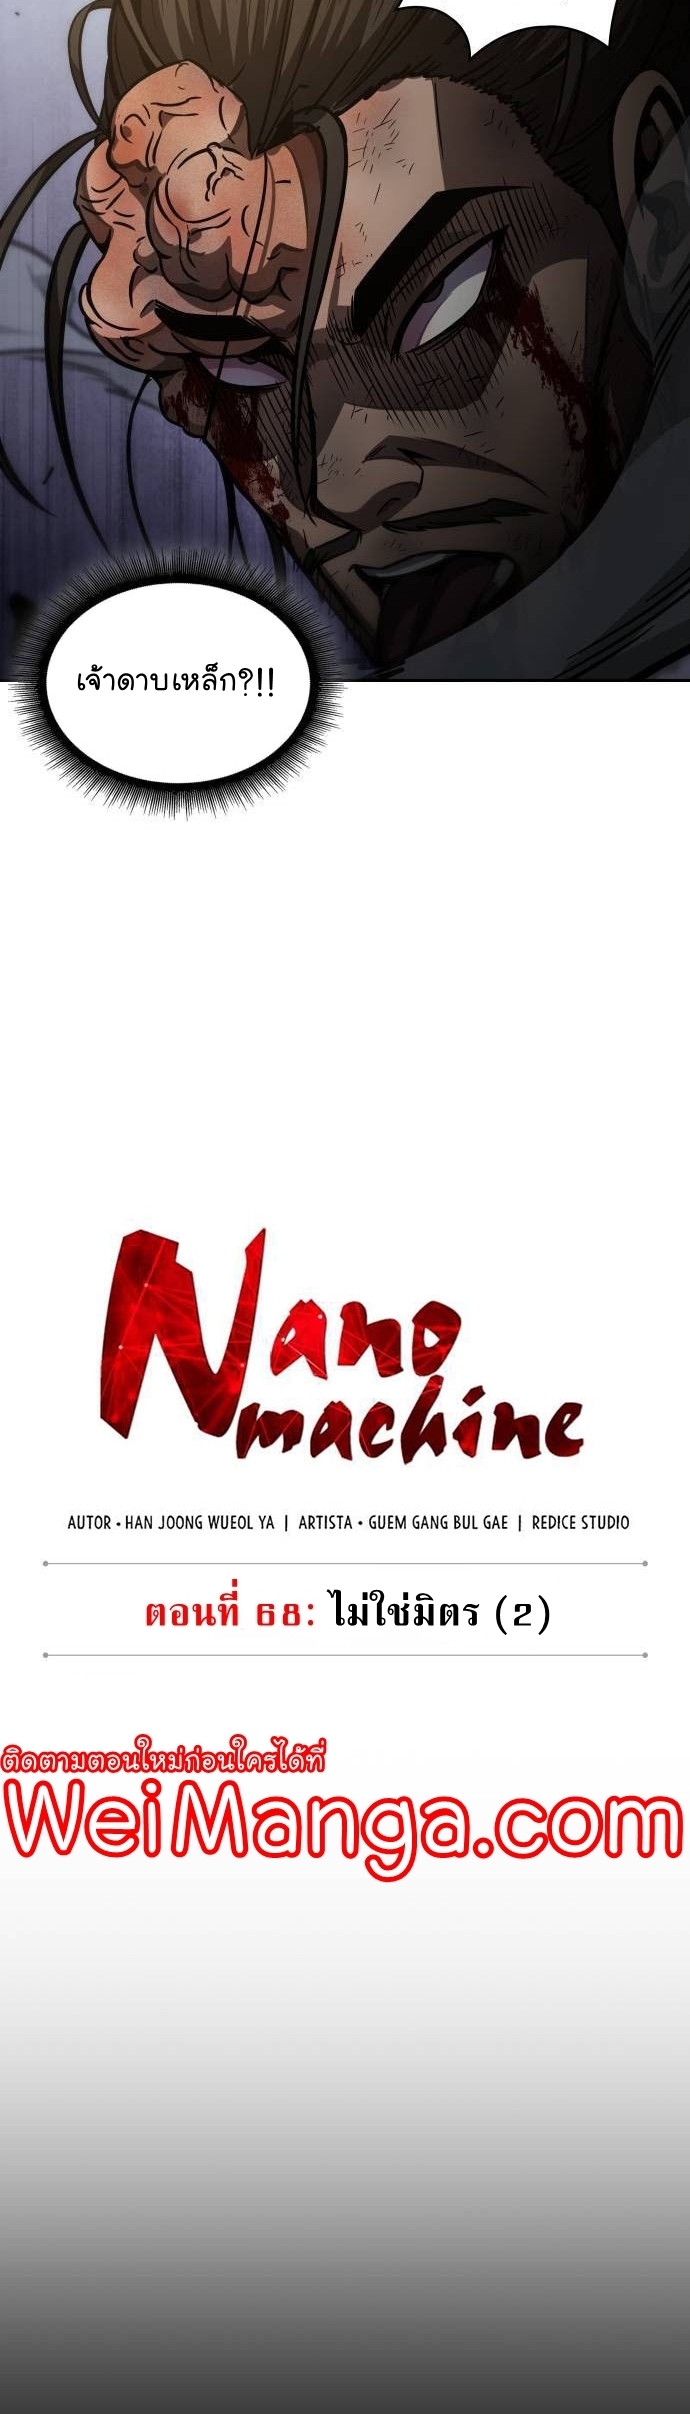 Nano Machine Wei Manga Manwha 200 (9)